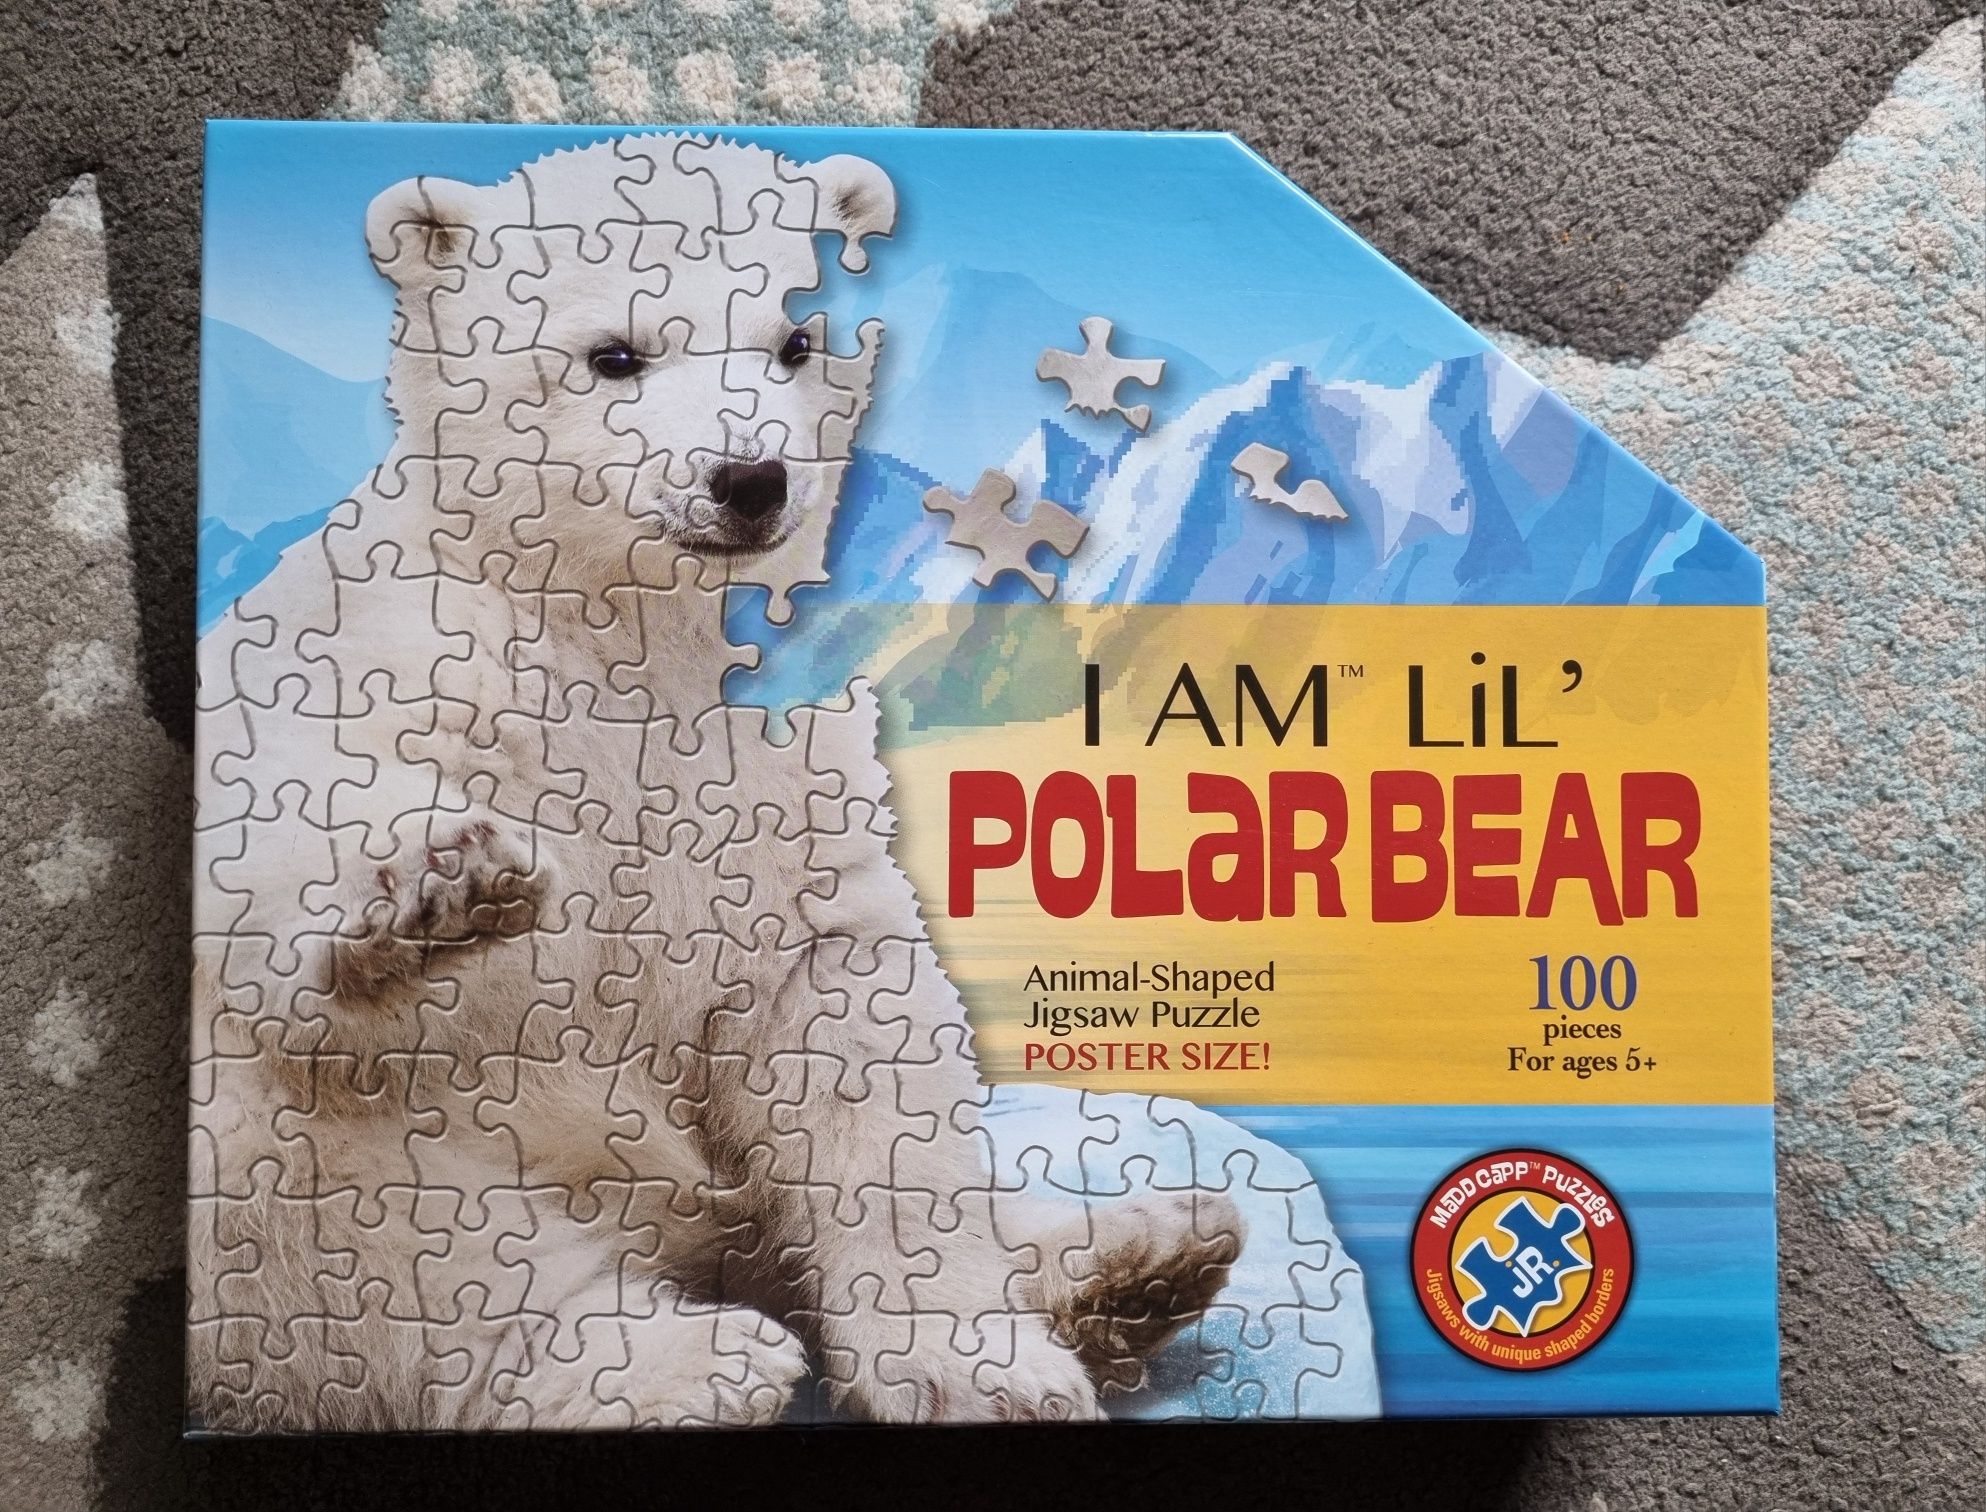 Madd Capp Puzzle konturowe, 100 elem, Polar Bear - miś polarny, j.nowe